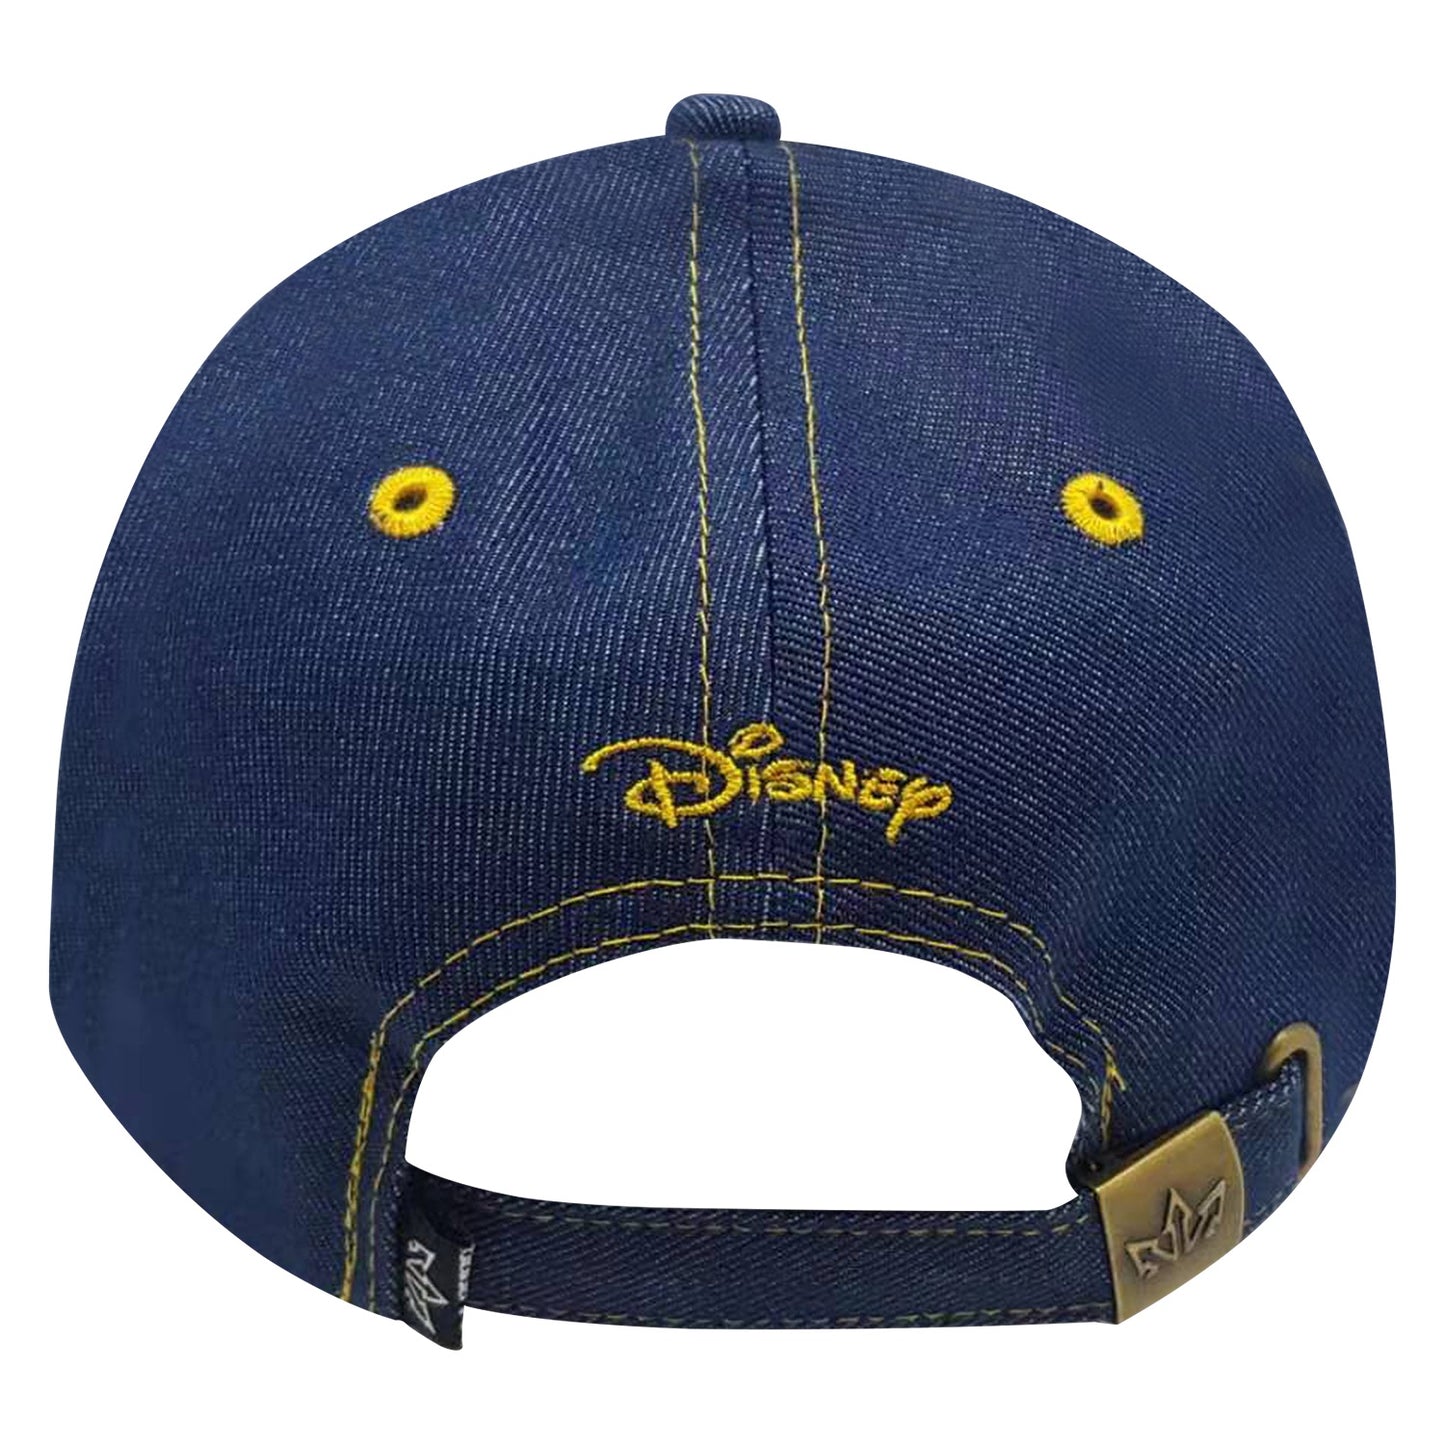 Mickey Mouse Baseball Caps in Denim